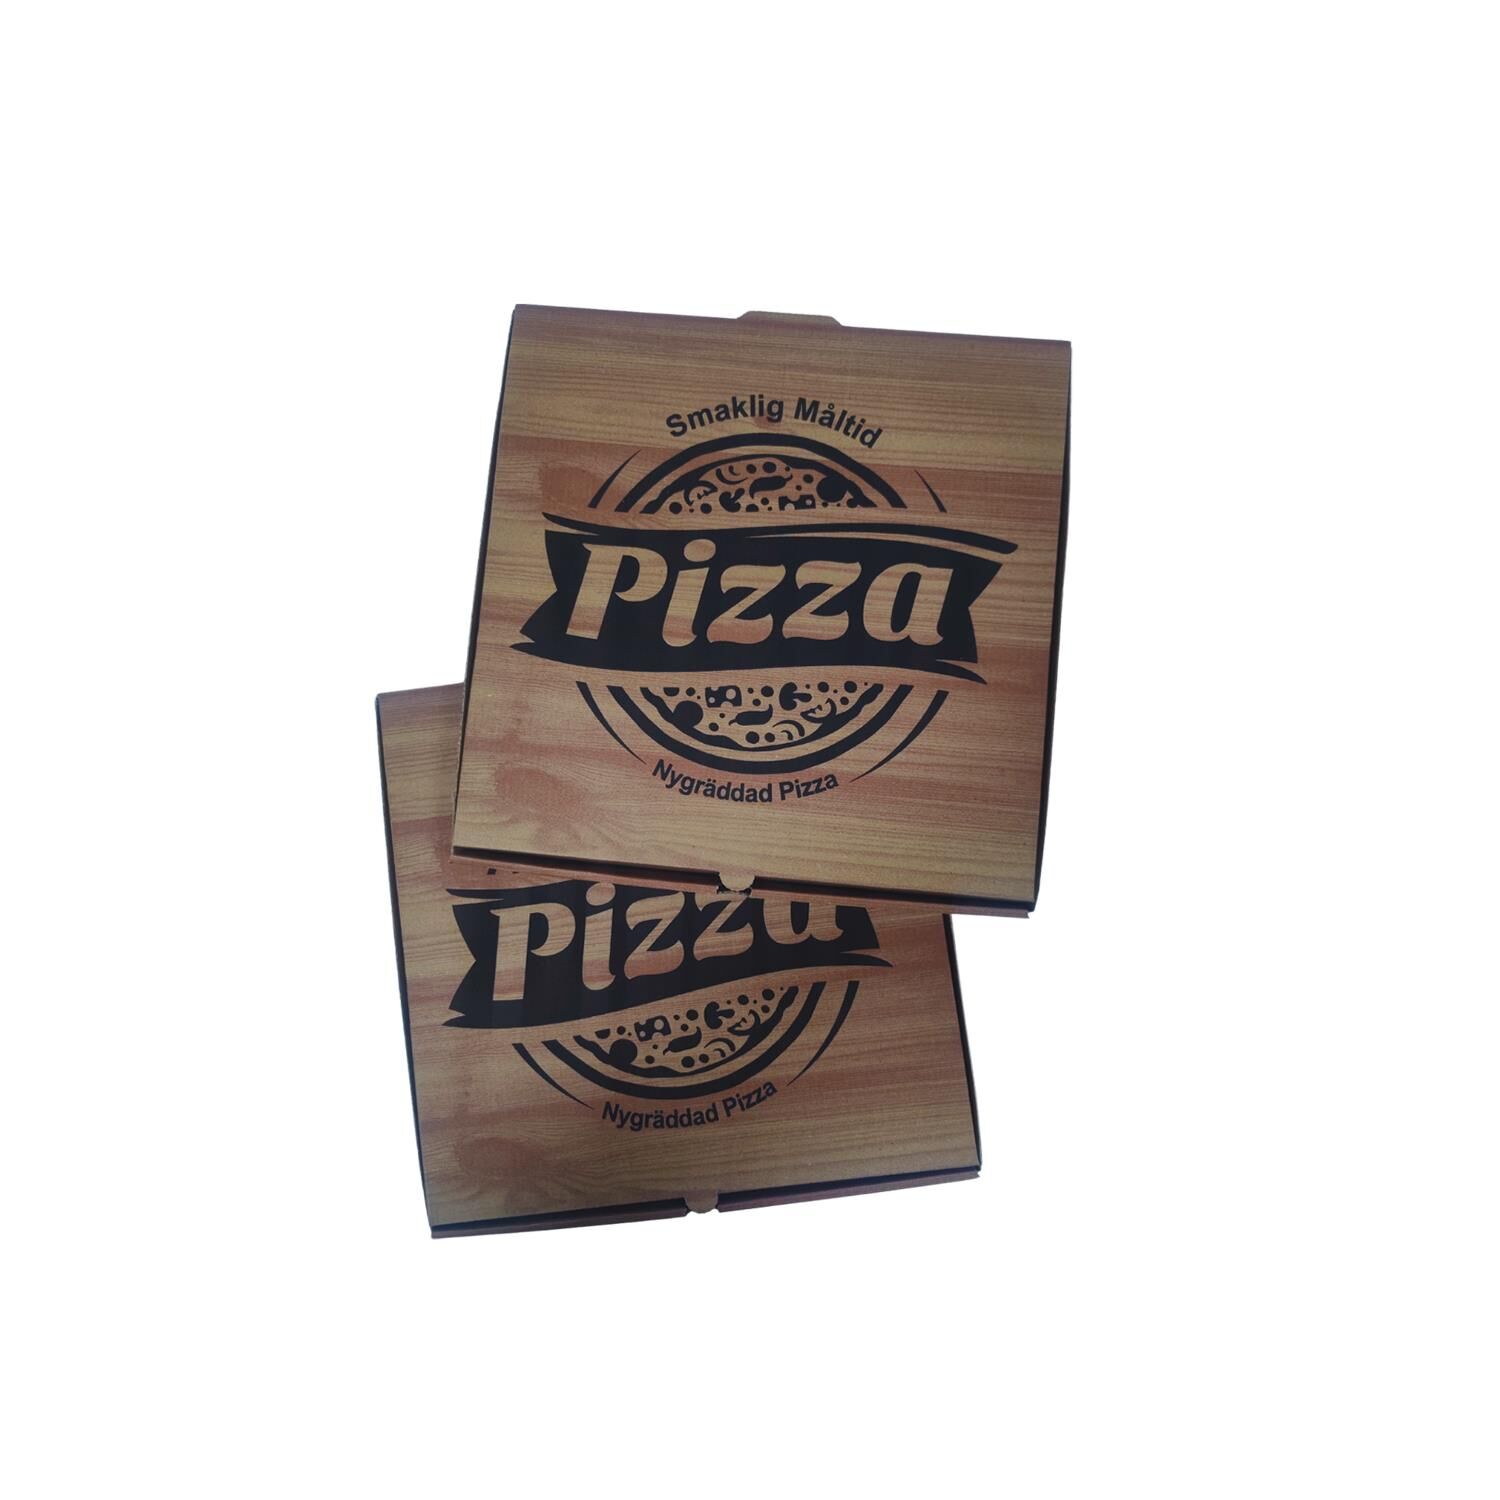 Pizza Delicius Baskı Esmer Pizza Kutusu 30x30x3,5 100'lü Paket